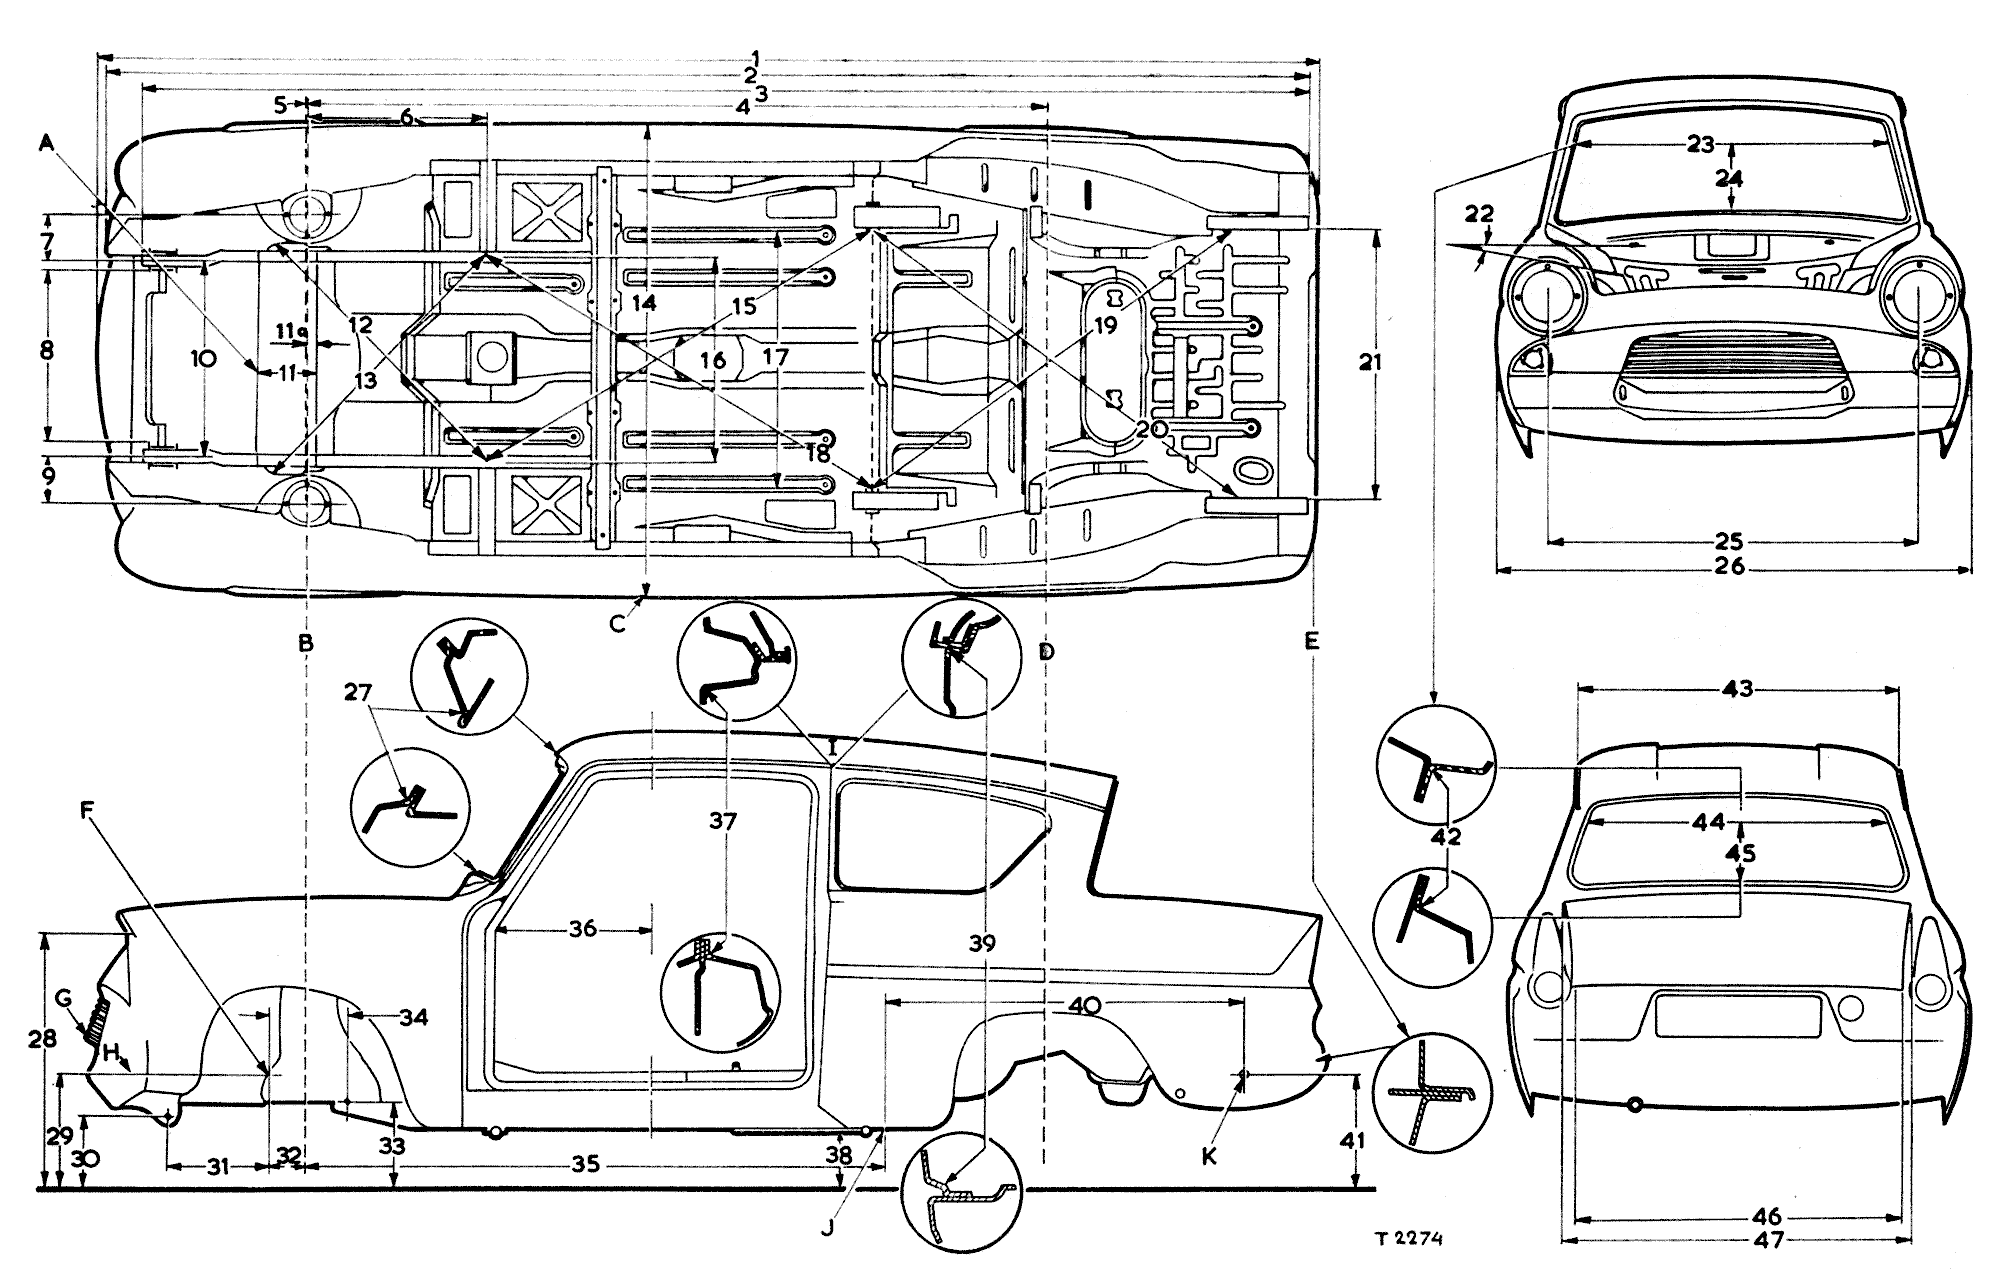 Ford Anglia blueprint